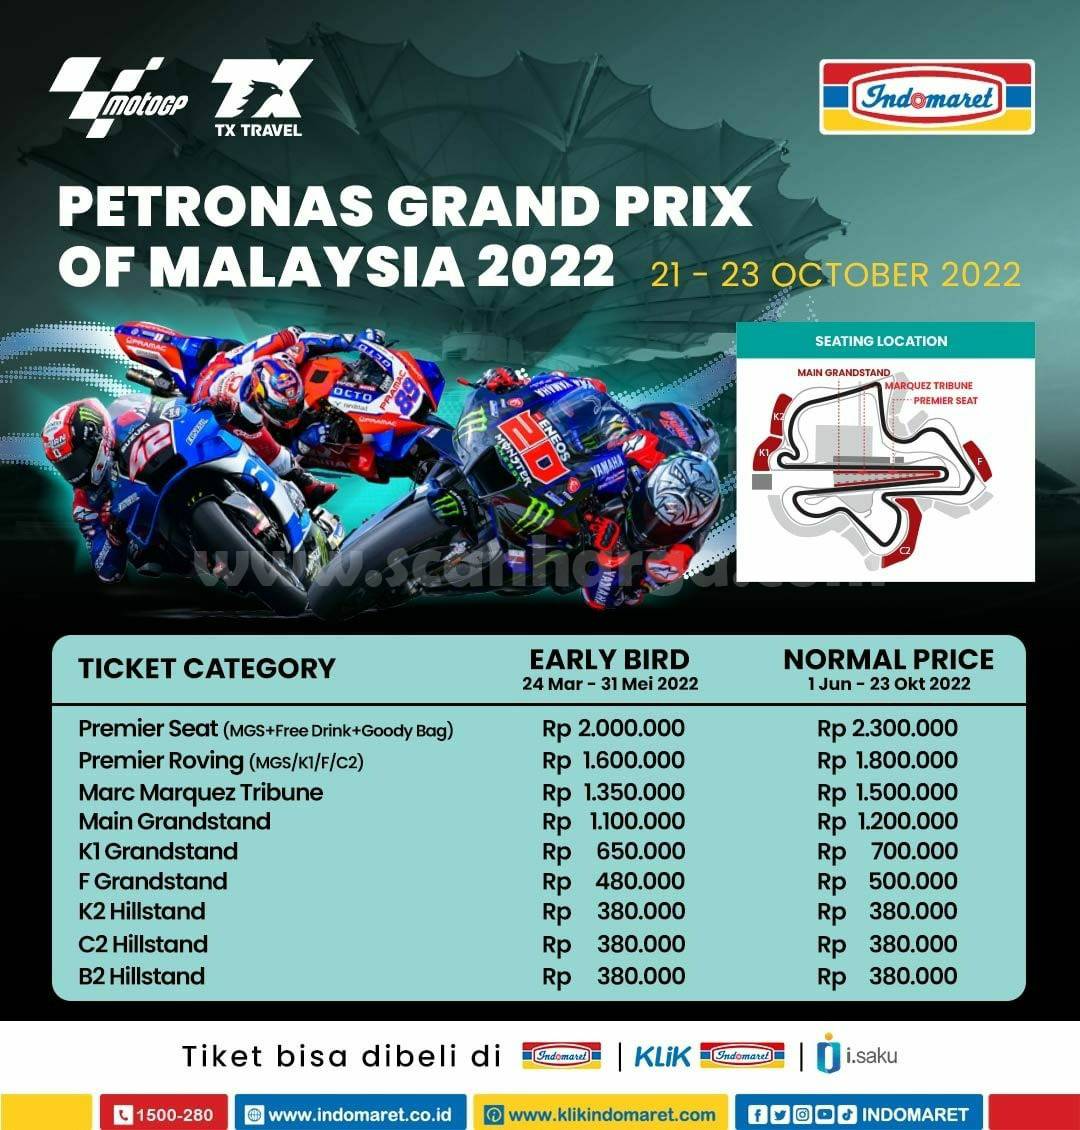 Harga Tiket Petronas Grand Prix Of Malaysia 2022 di Indomaret